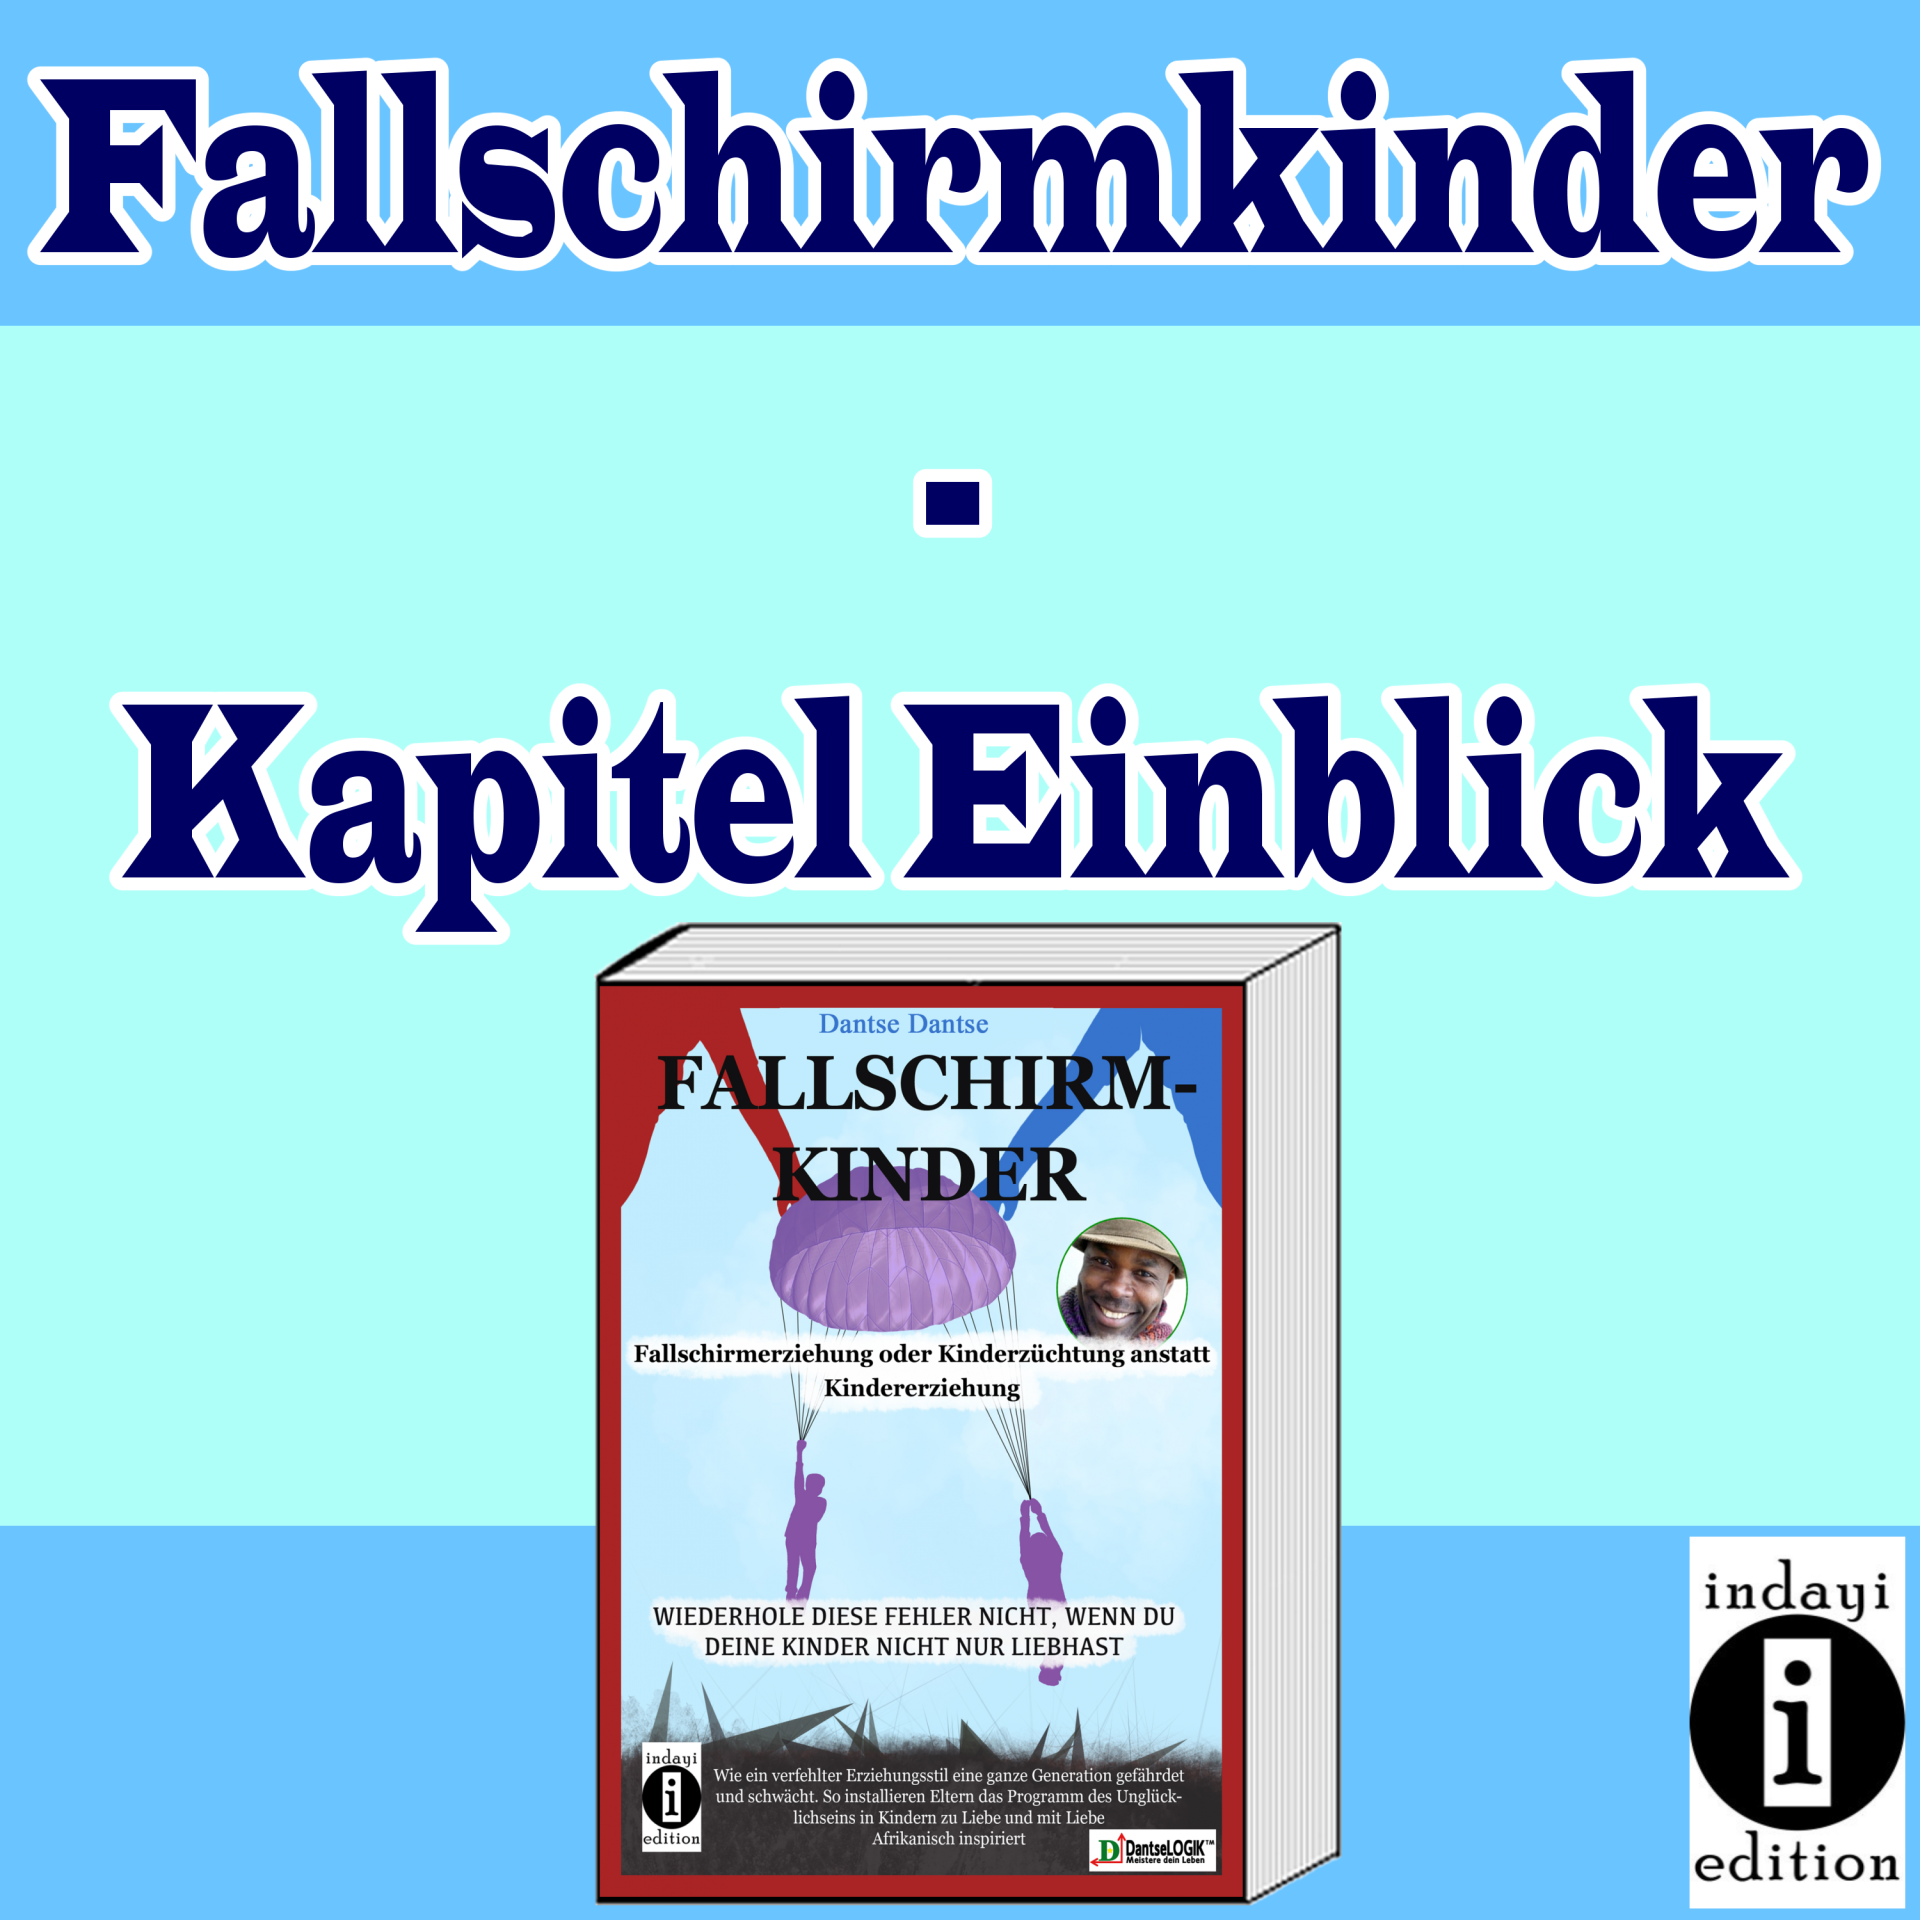 En este momento estás viendo Fallschirmkinder – Kapitel Einblick // Spruch des Tages 17.09.2021